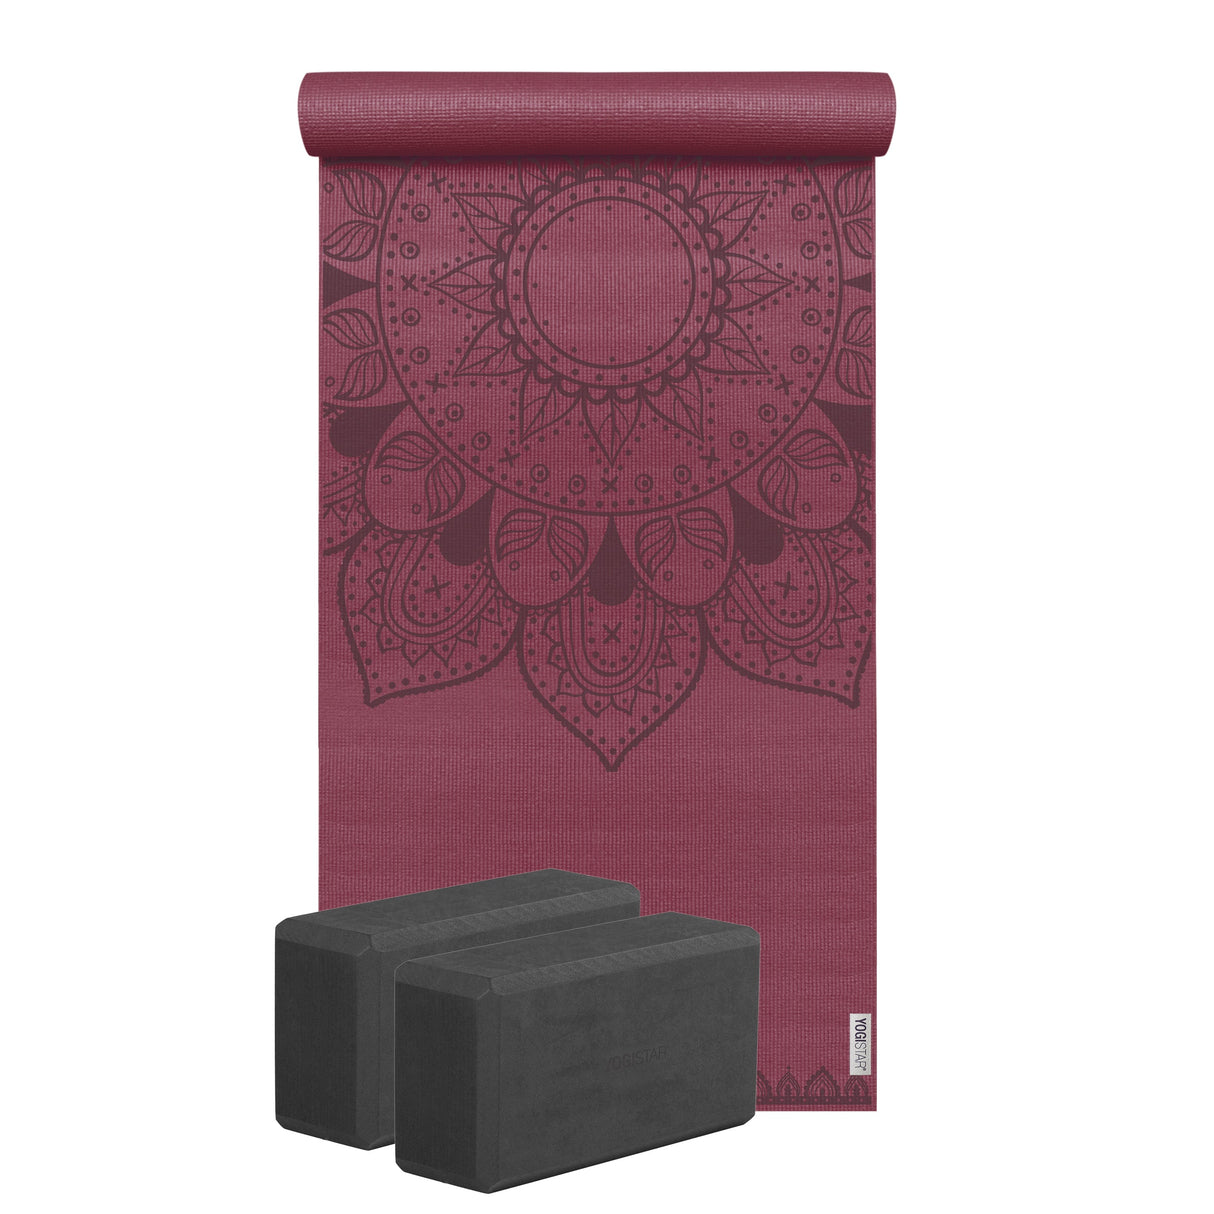 Yoga-Set Starter Edition - harmonic mandala (Yogamatte + 2 Yogablöcke) - bordeaux/zen black